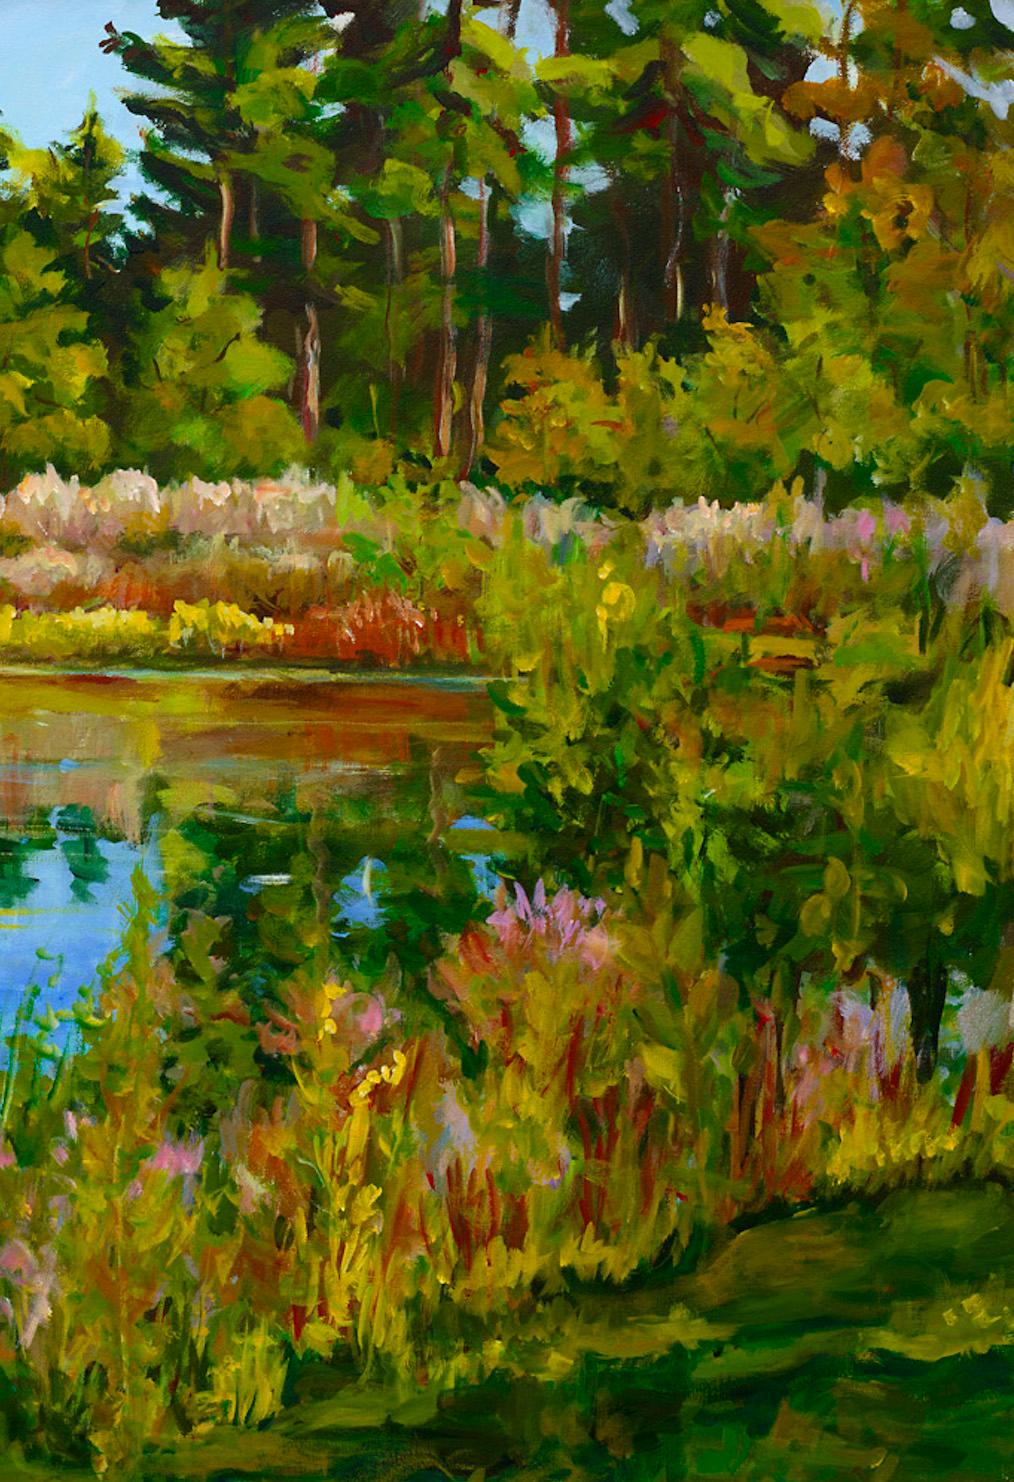 Rock Valley College Pond, Original Contemporary Impressionist Landscape Painting, 2014
30